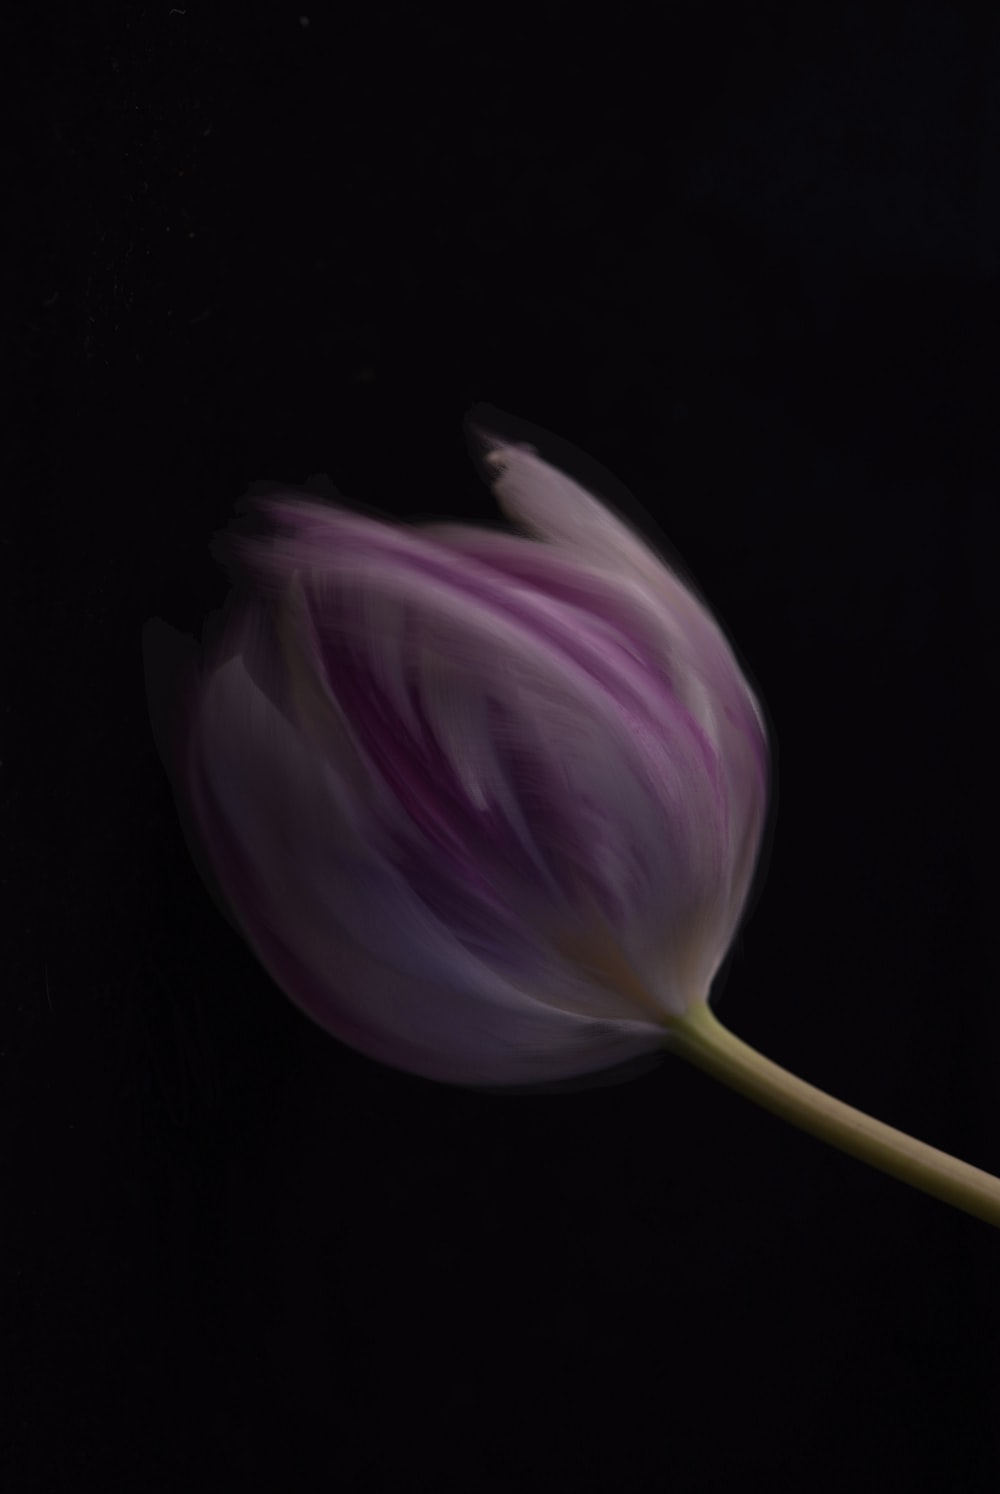 Black Tulip Picture. Download Free Image